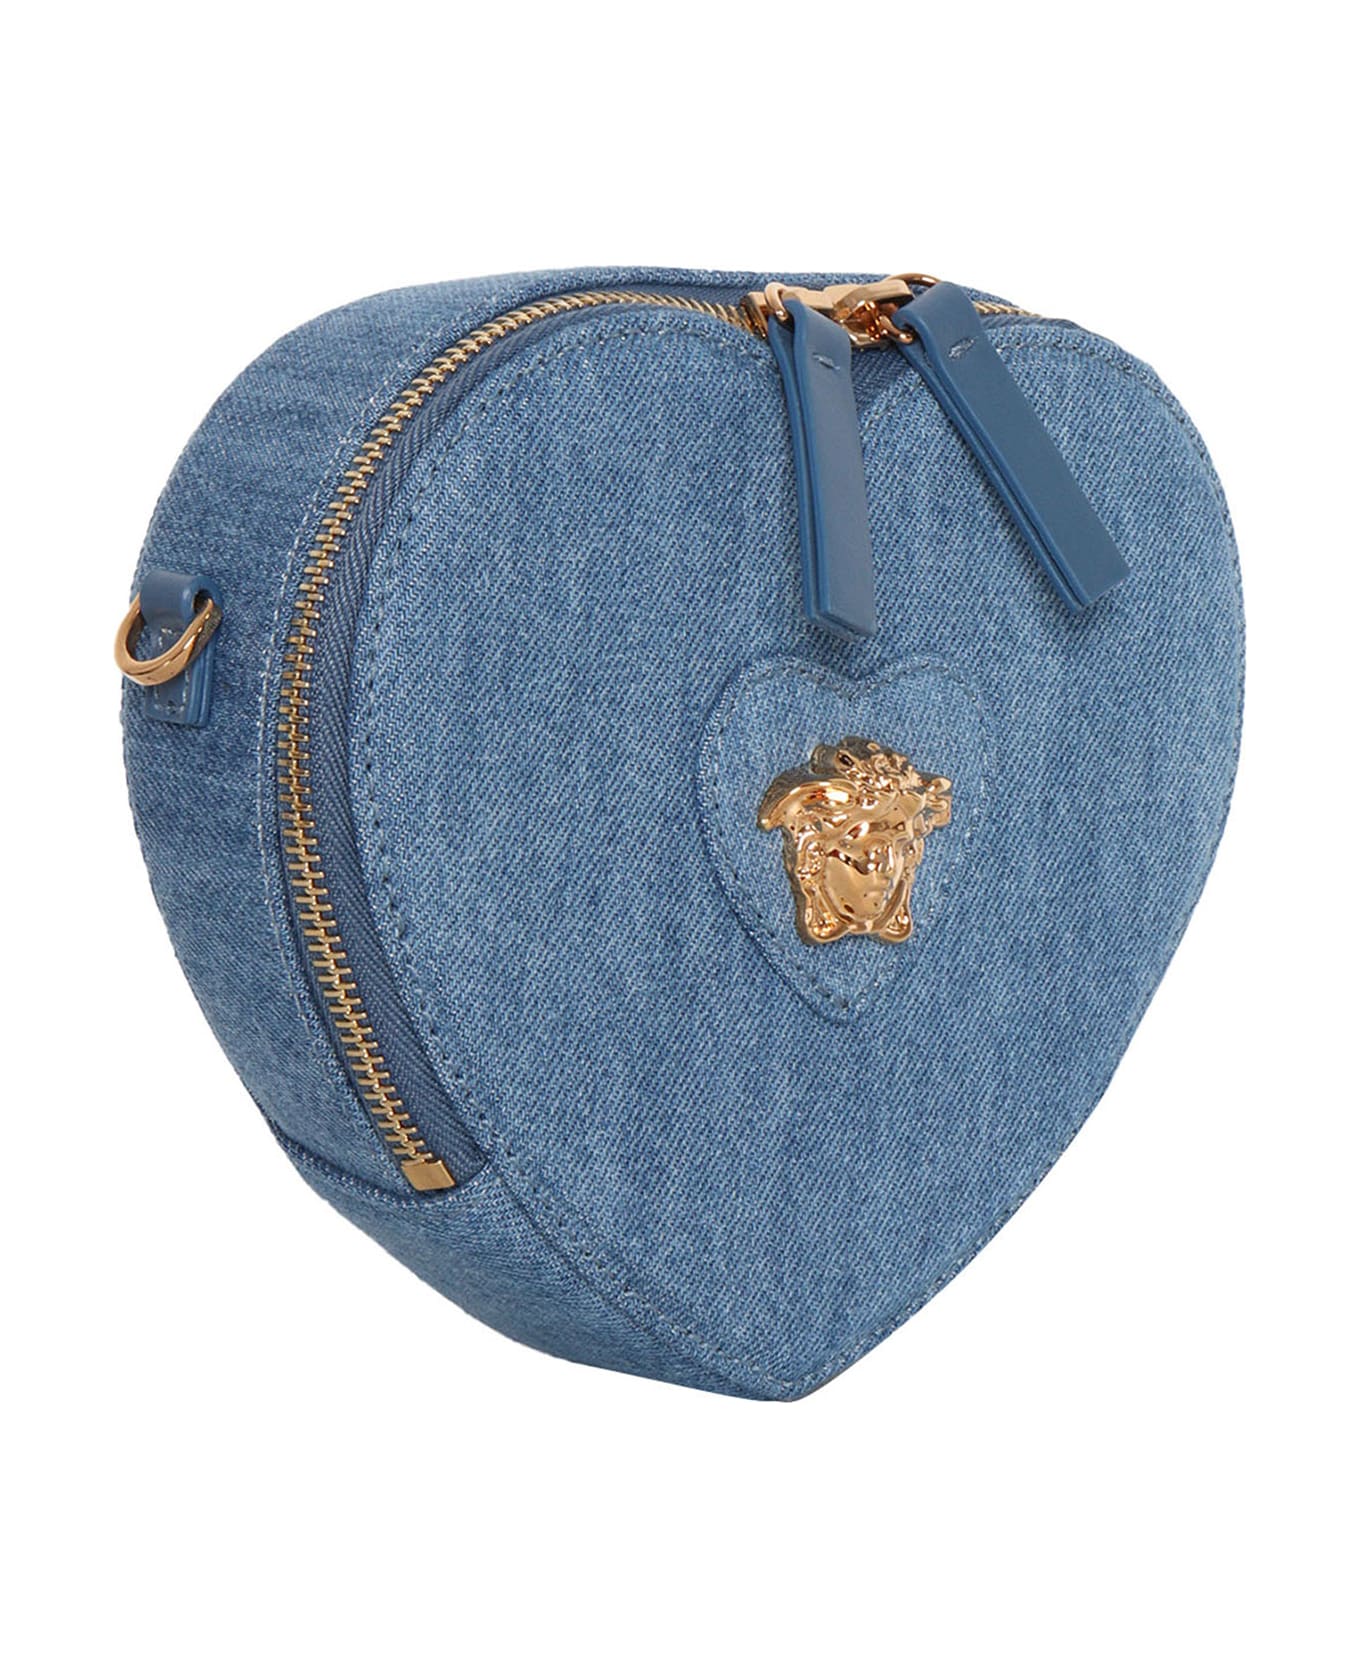 Versace Heart-shaped Bag - BLUE